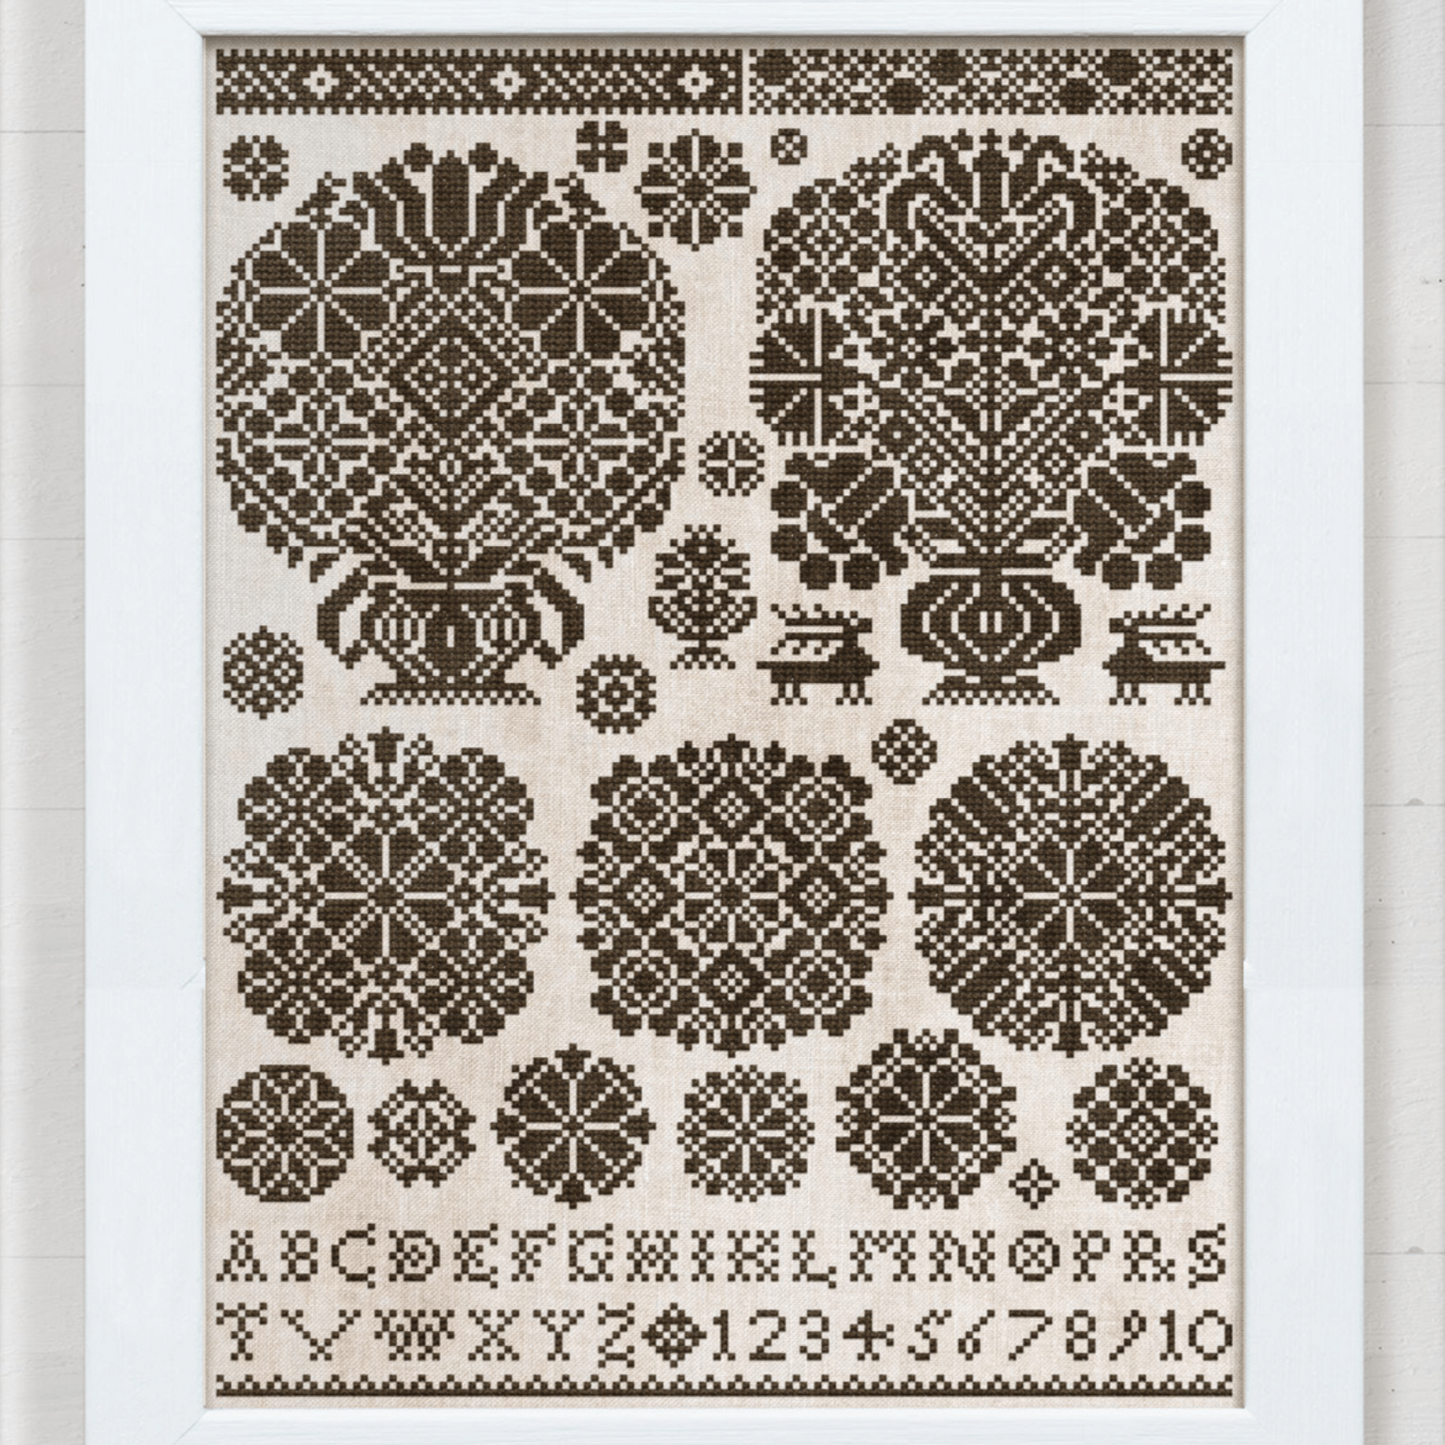 Modern Folk Embroidery - A Medium Vierlande Style Sampler - Booklet Chart